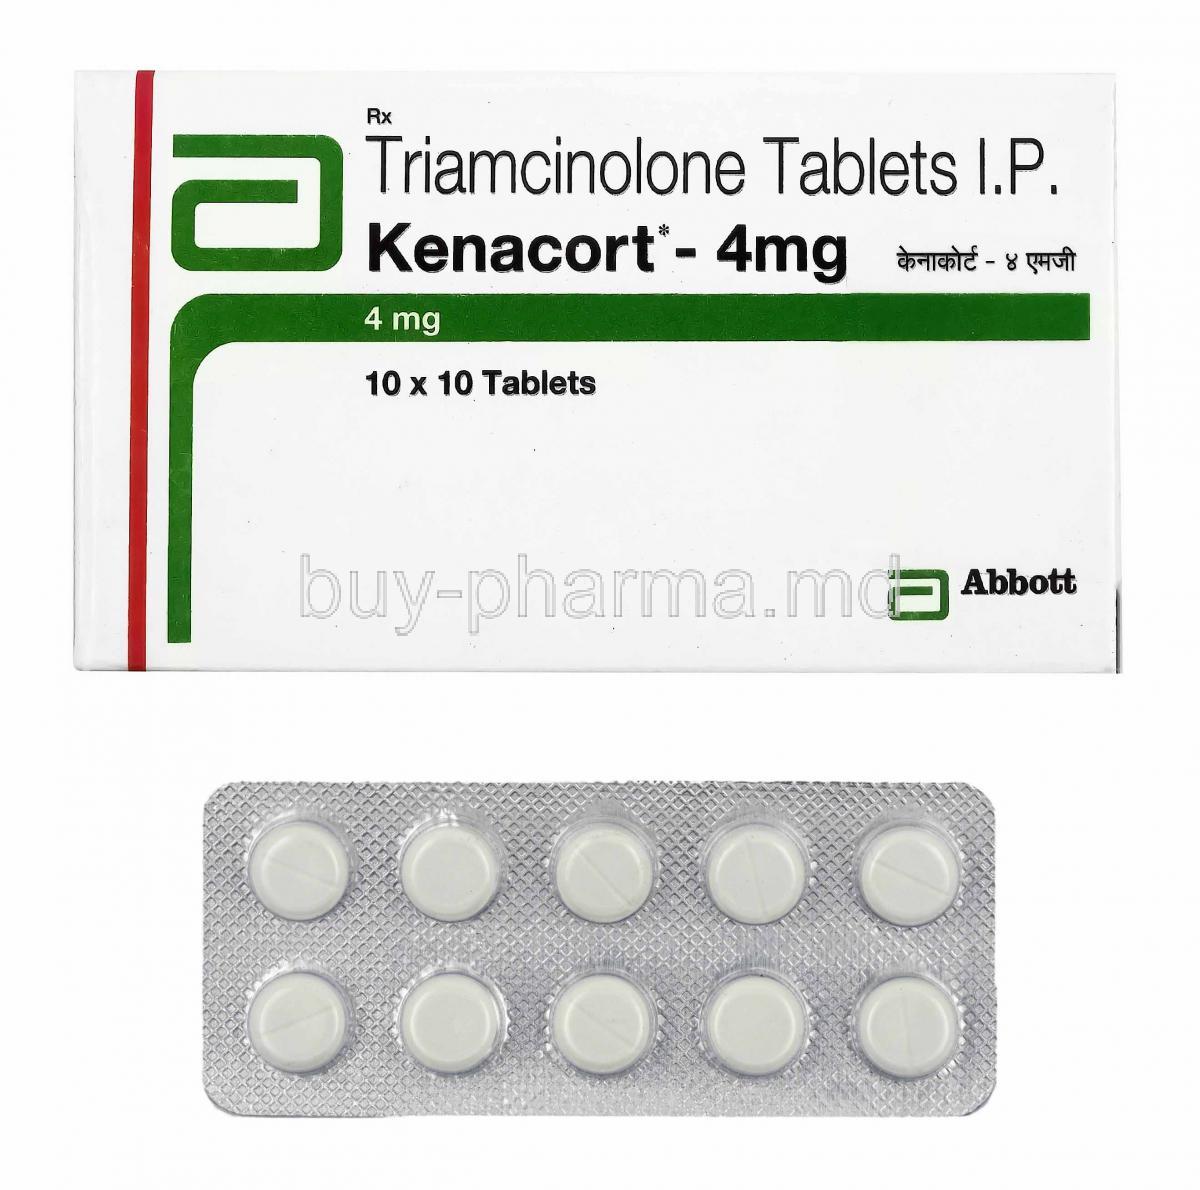 Kenacort, Triamcinolone 4mg box and tablets